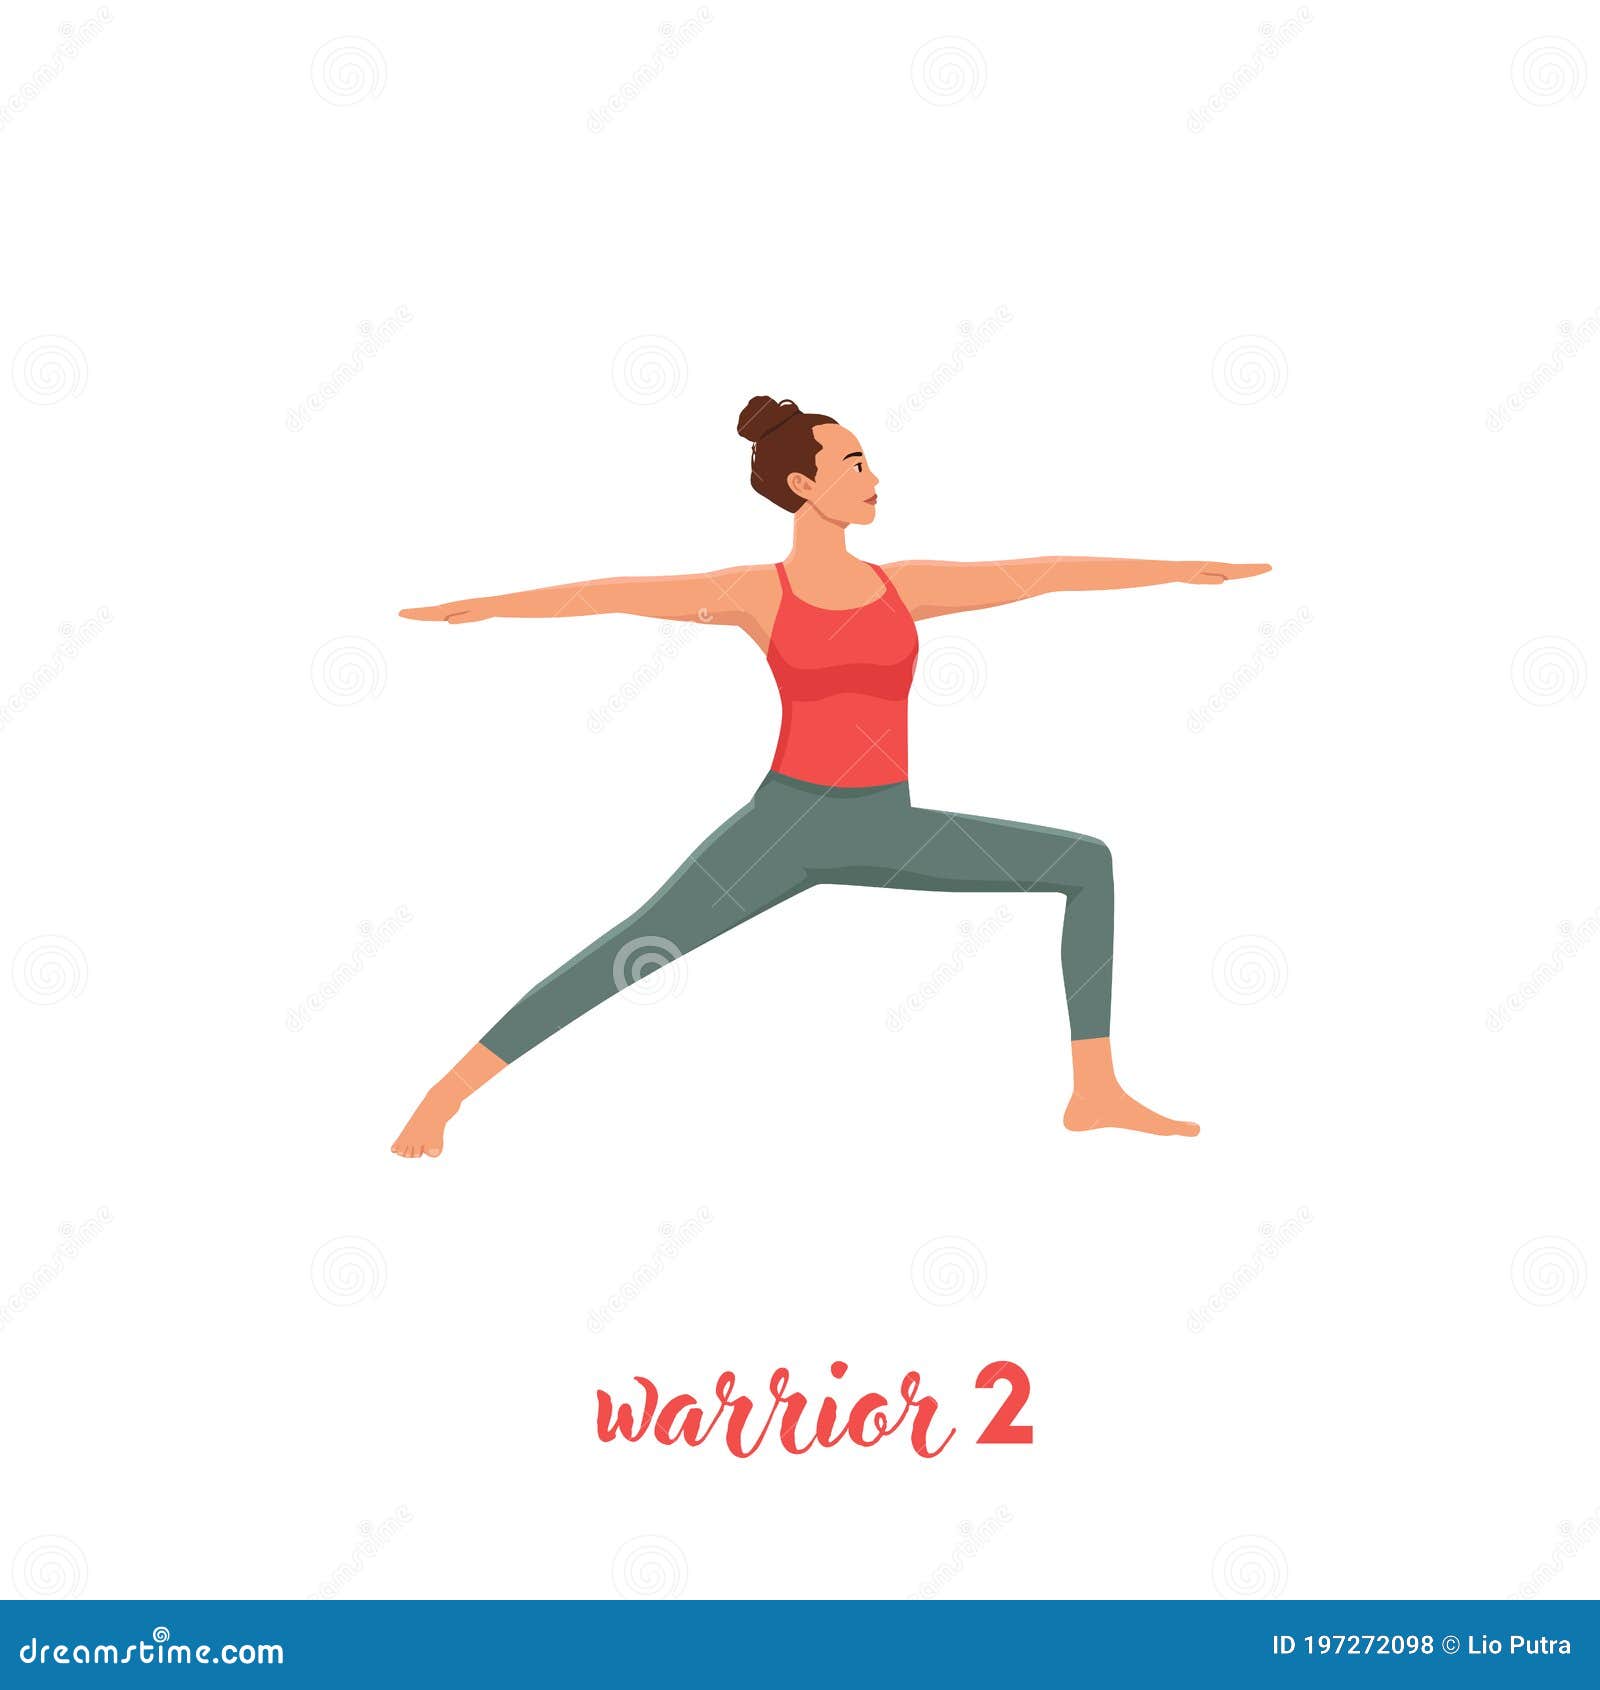 Gaze Yoga: 5 Yoga Poses That Lift Your Gaze | Liforme